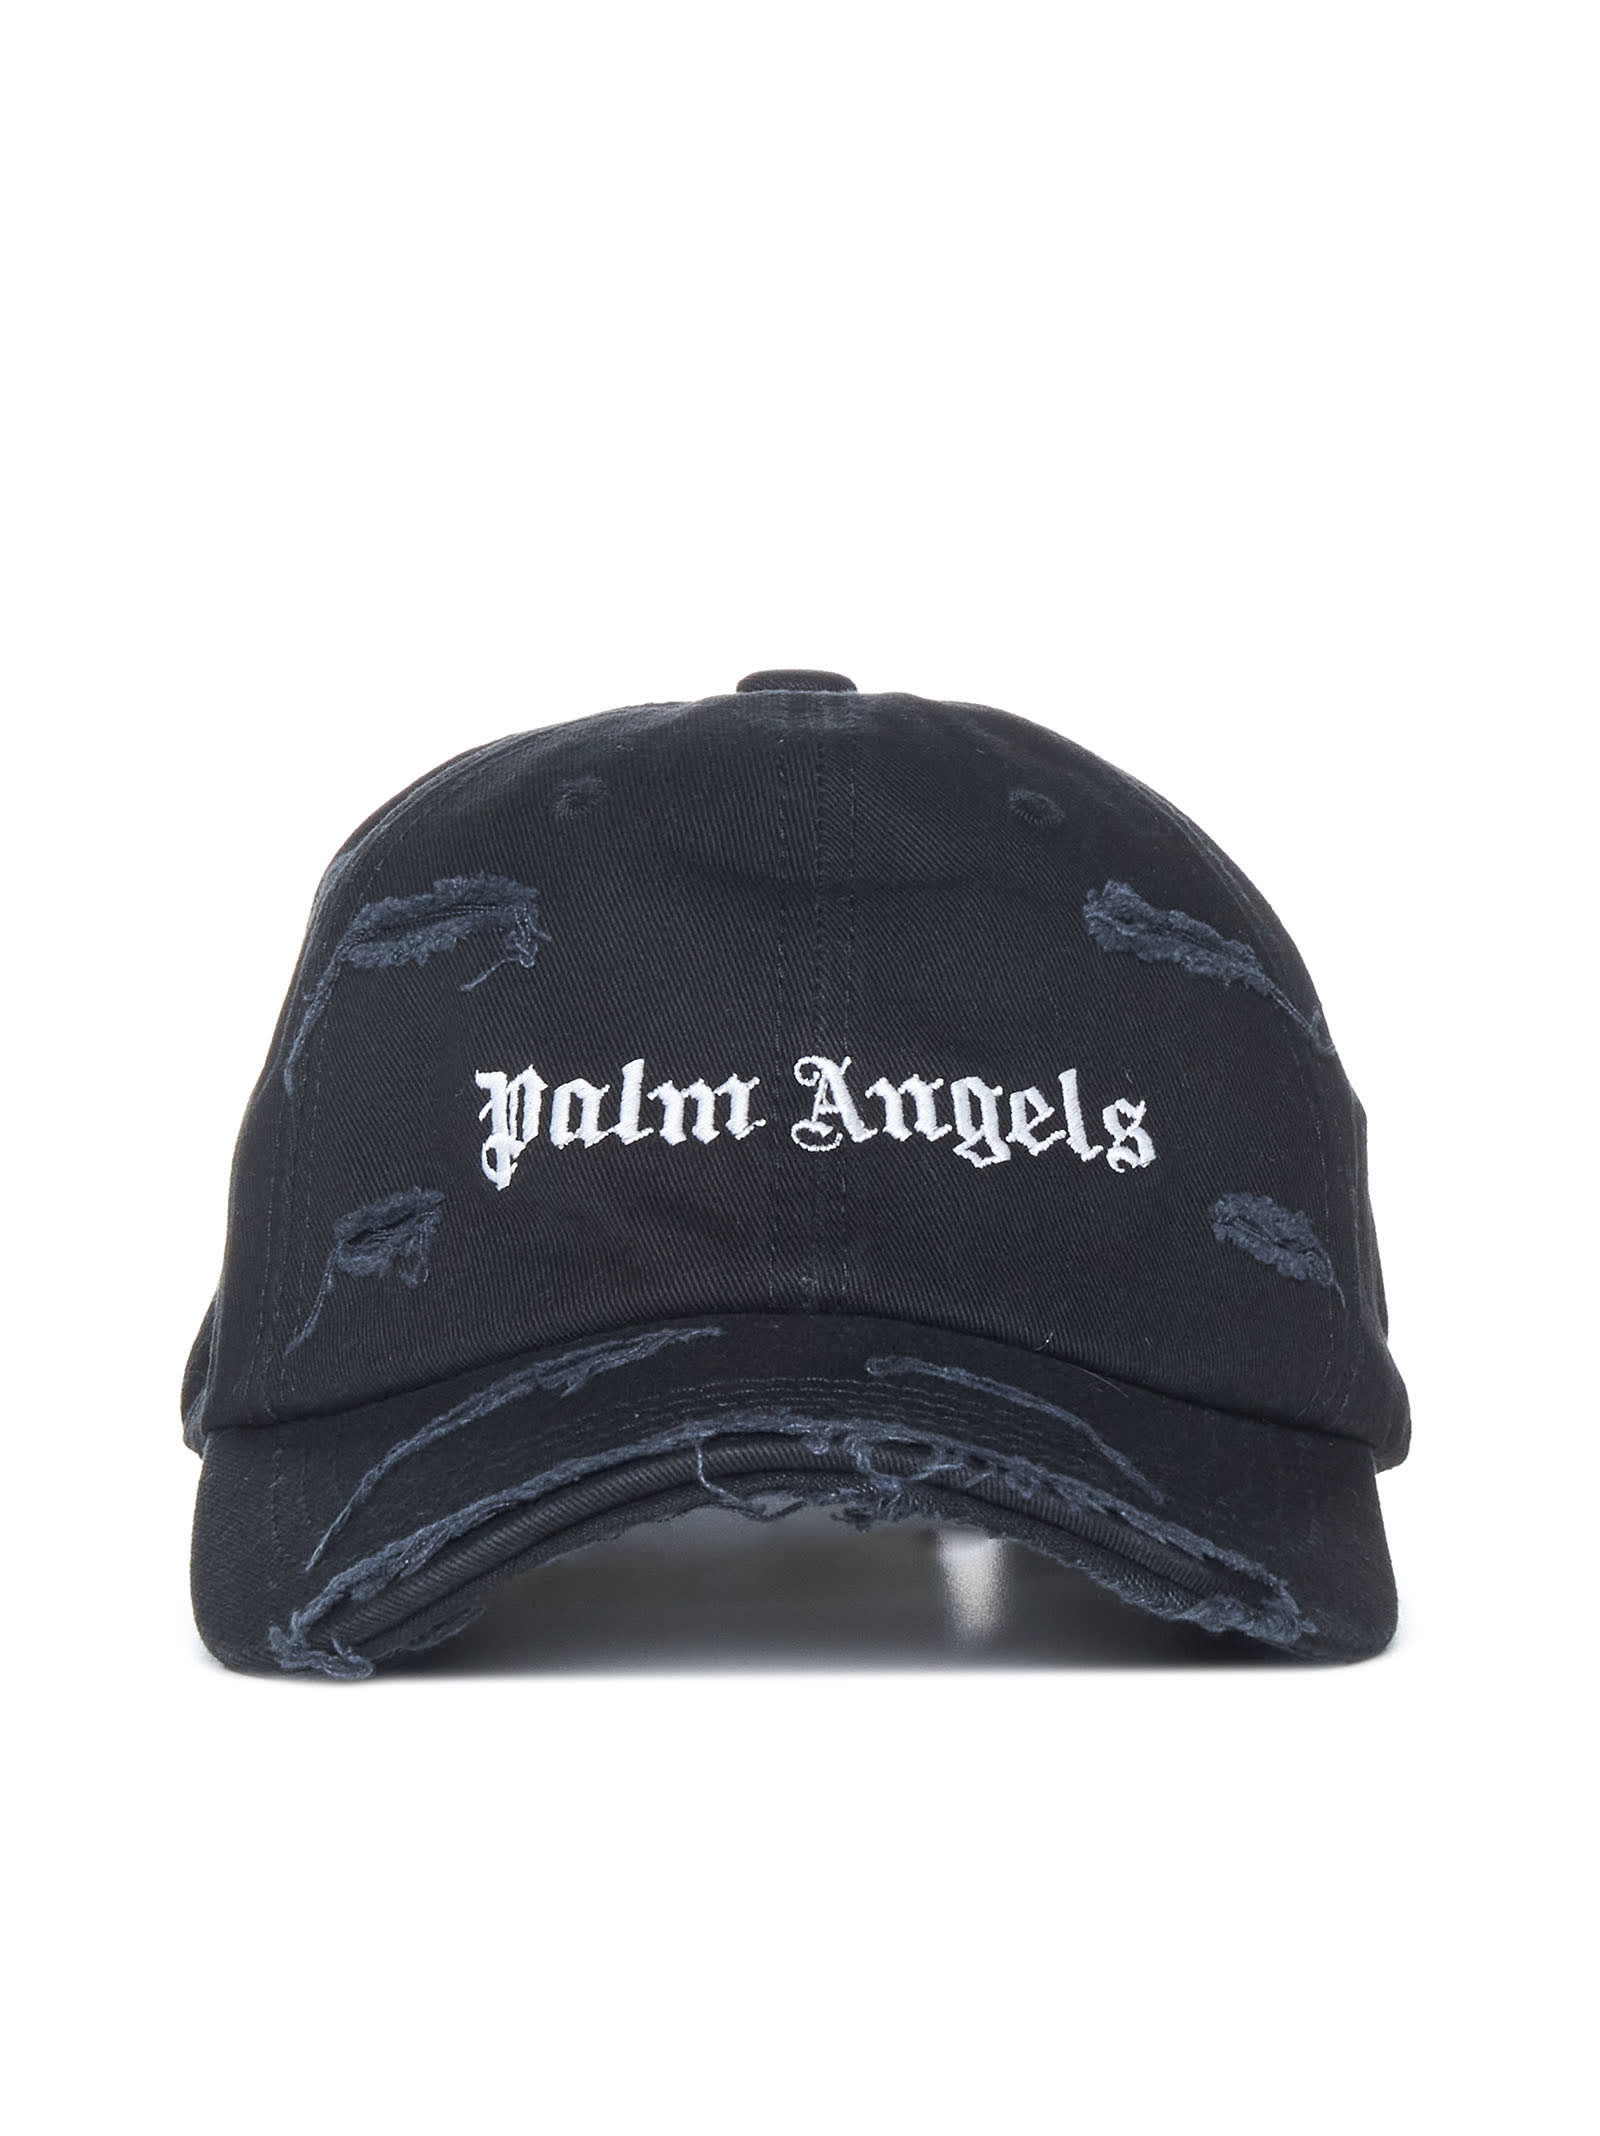 Palm Angels Hat